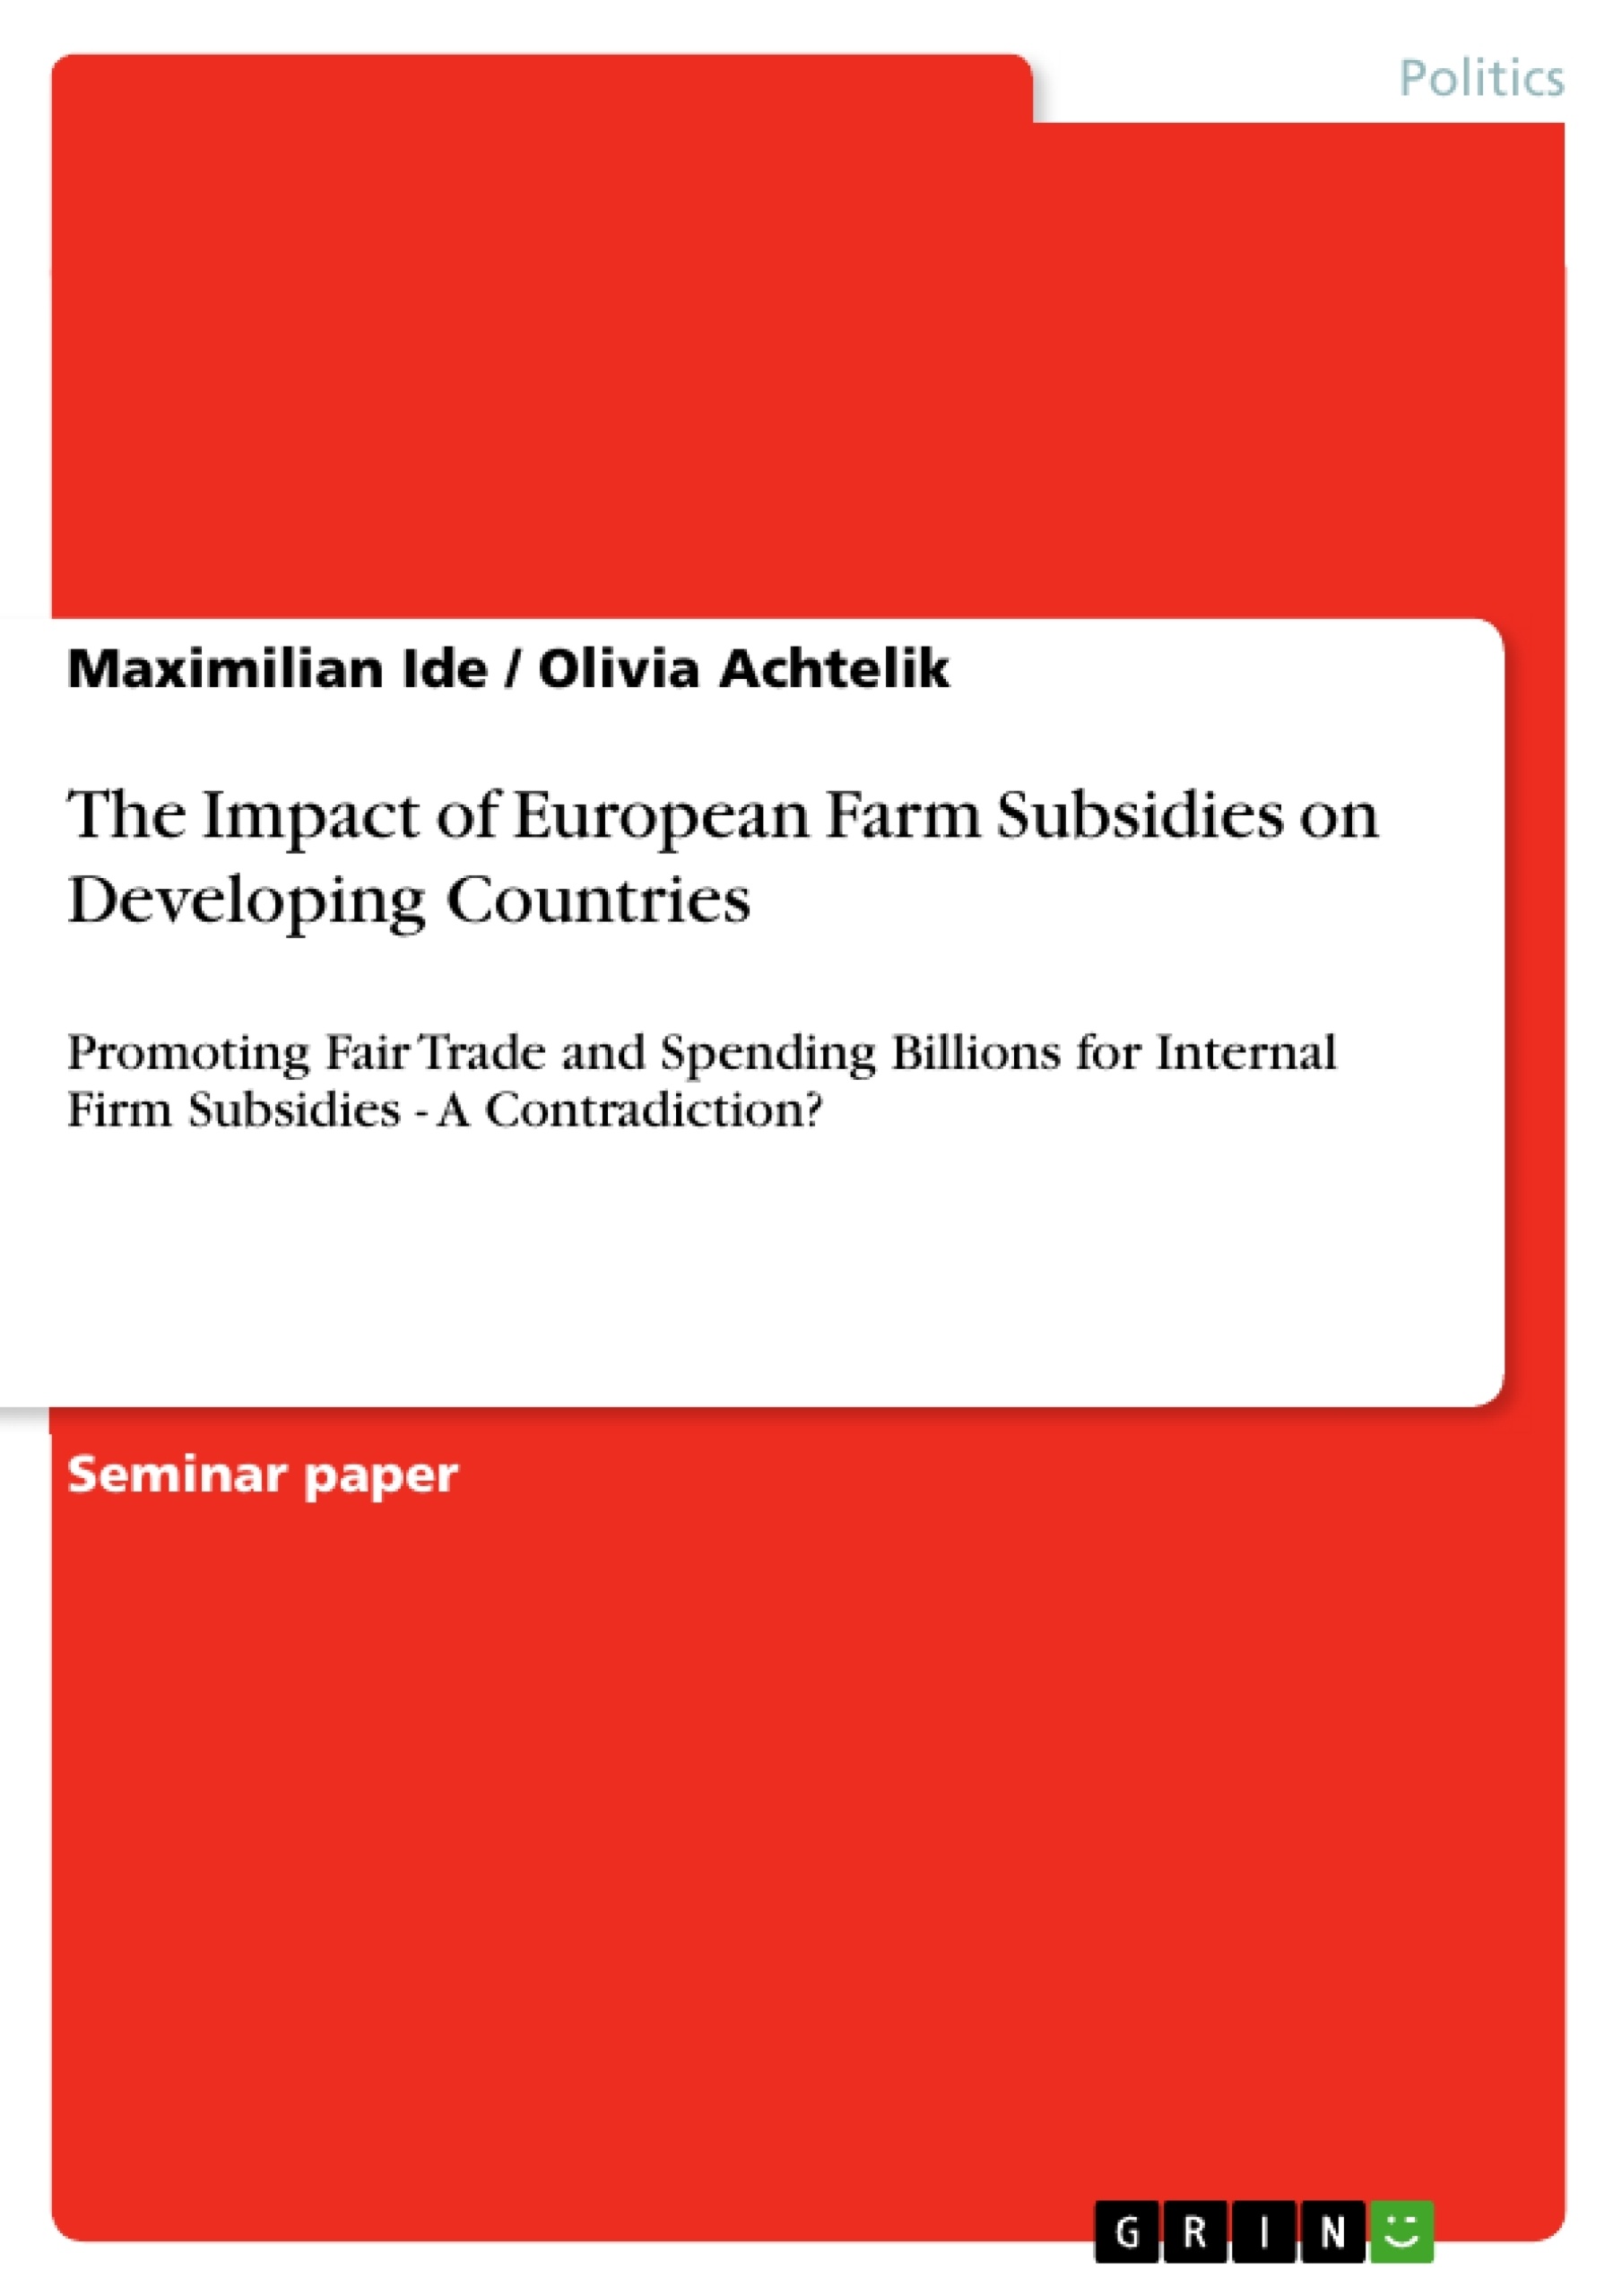 Title: The Impact of European Farm Subsidies on Developing Countries